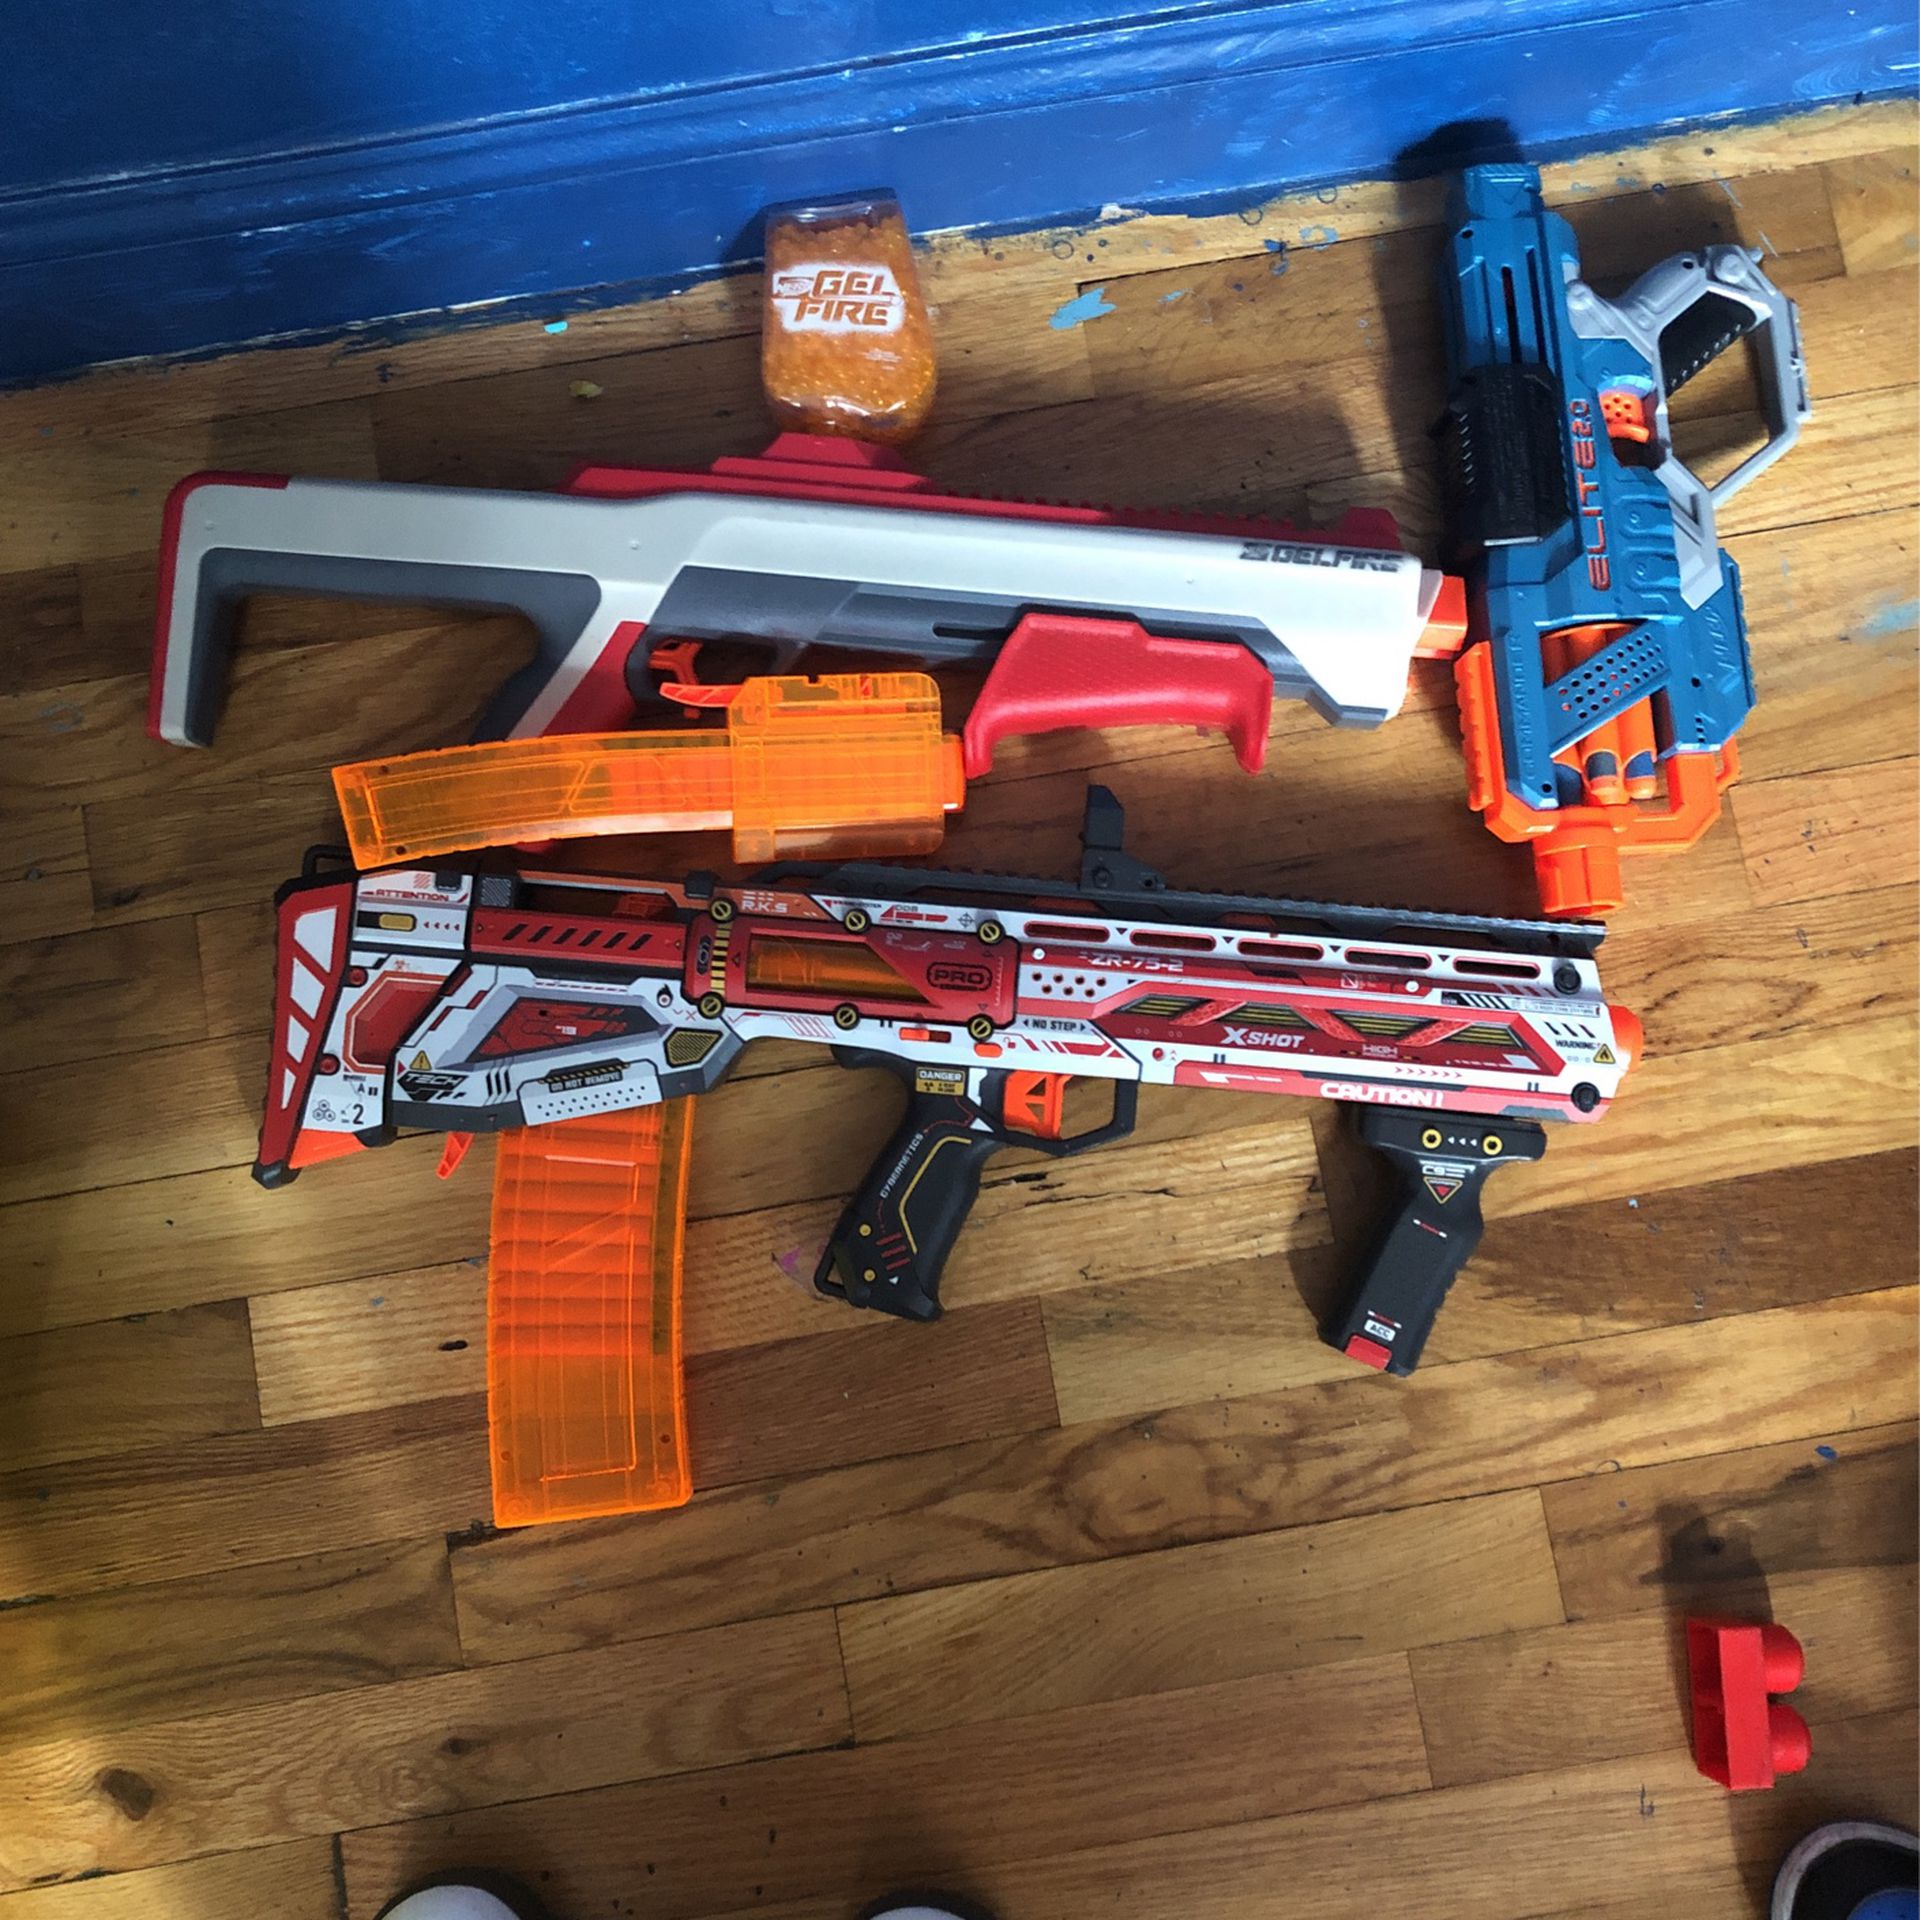 Nerfs Toy Guns